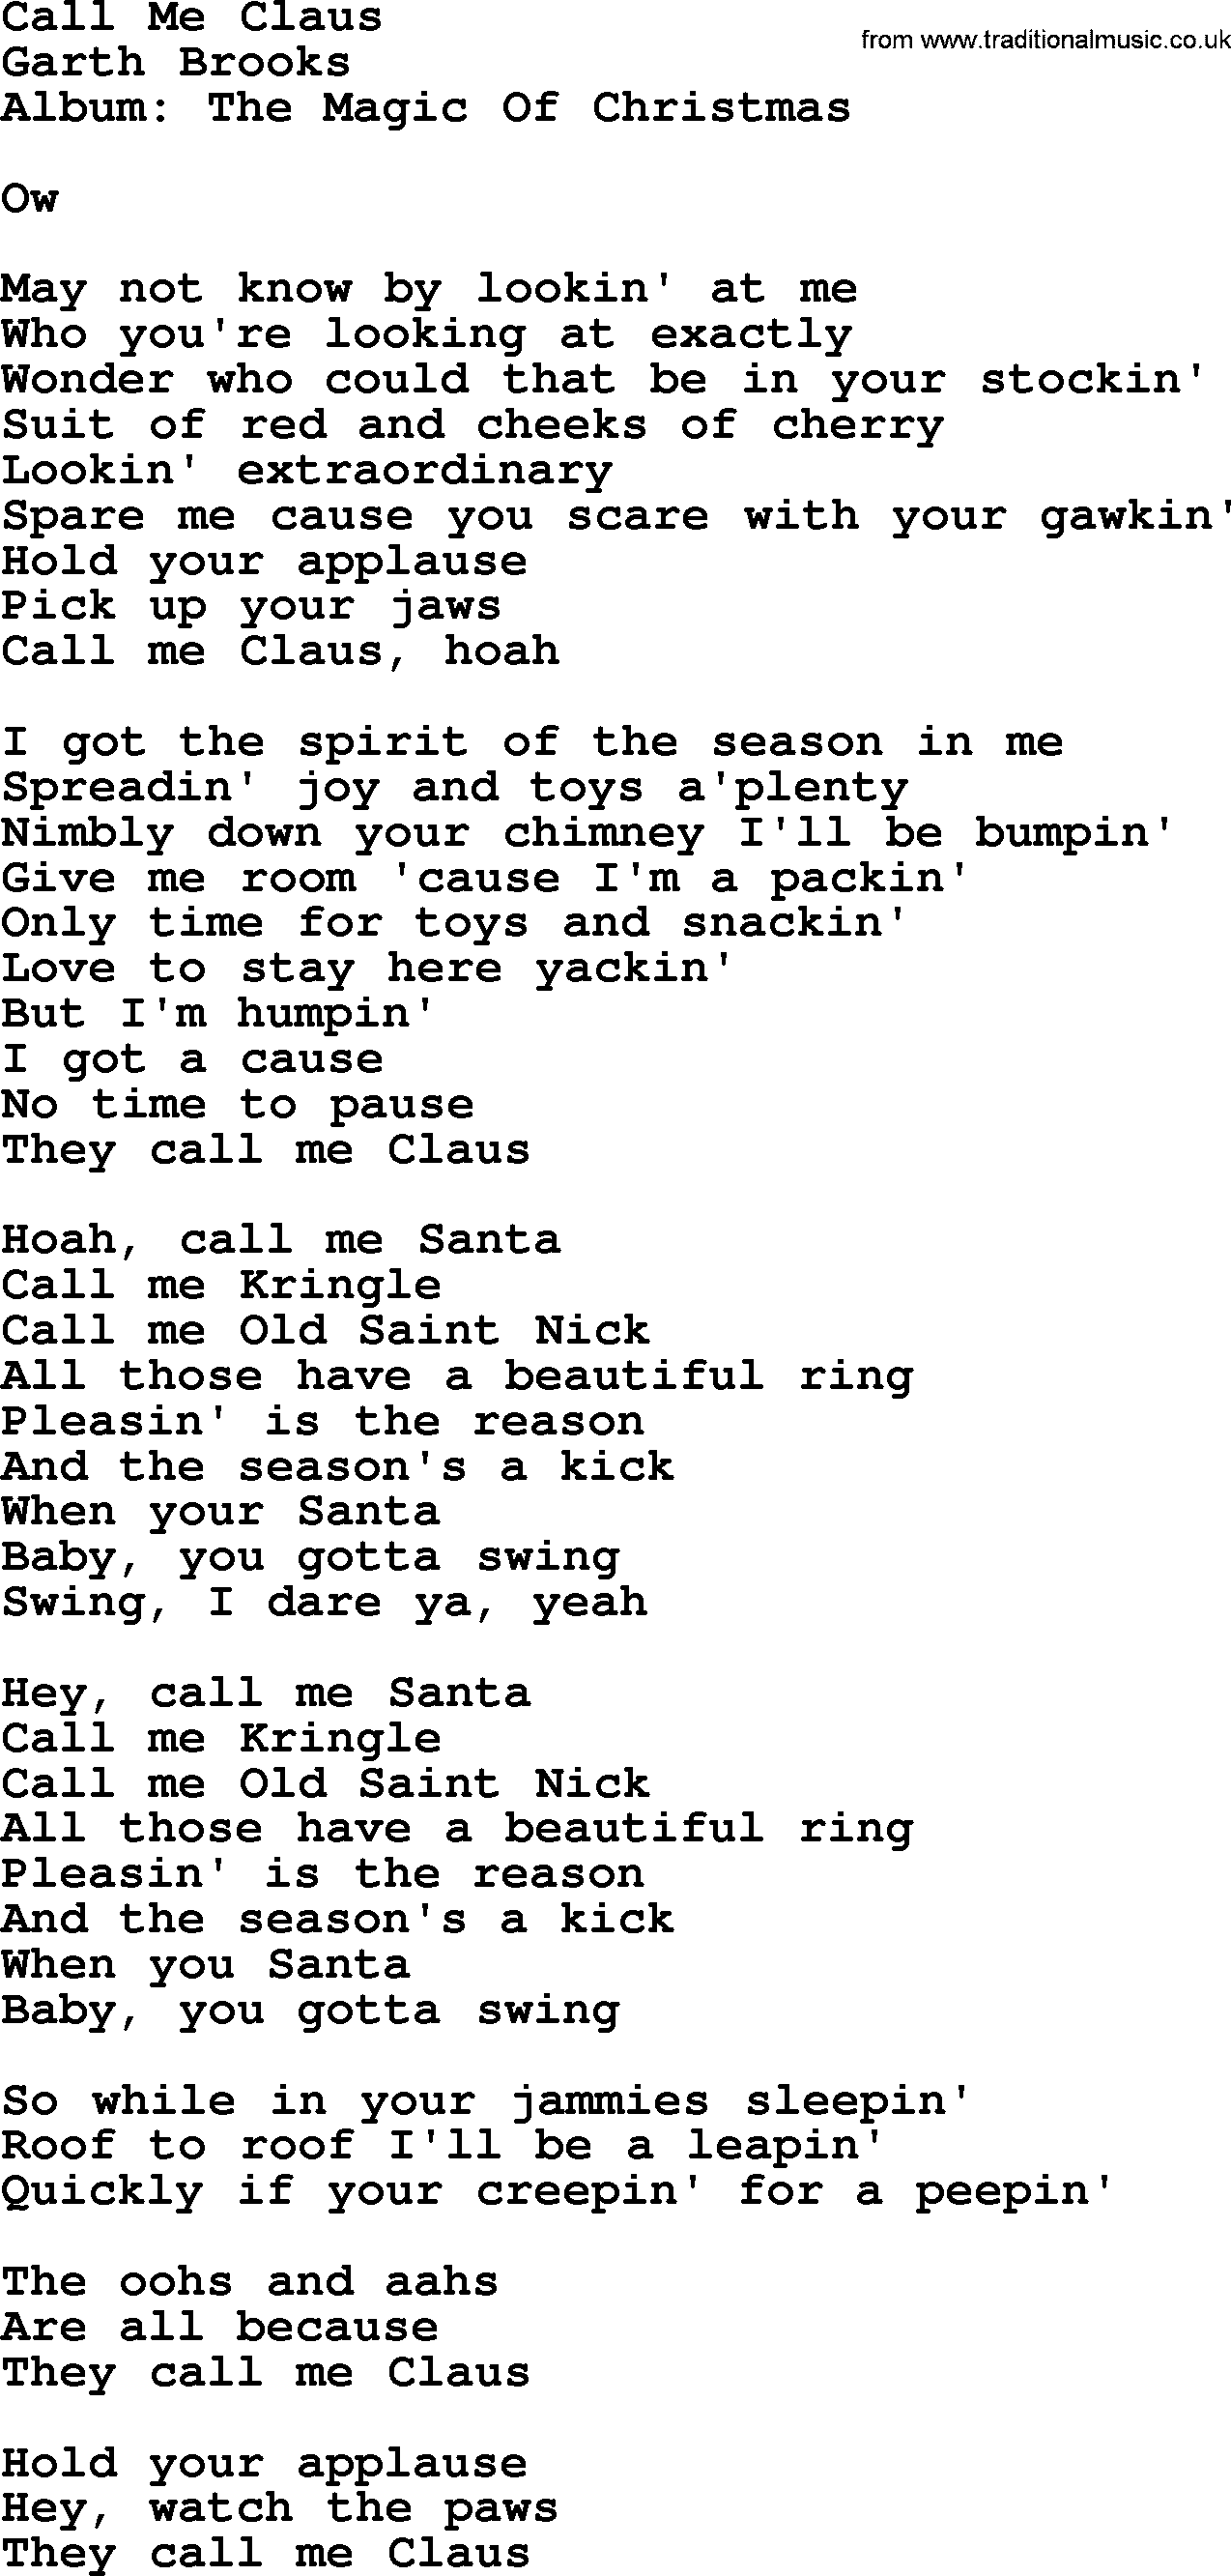 Garth Brooks song: Call Me Claus, lyrics